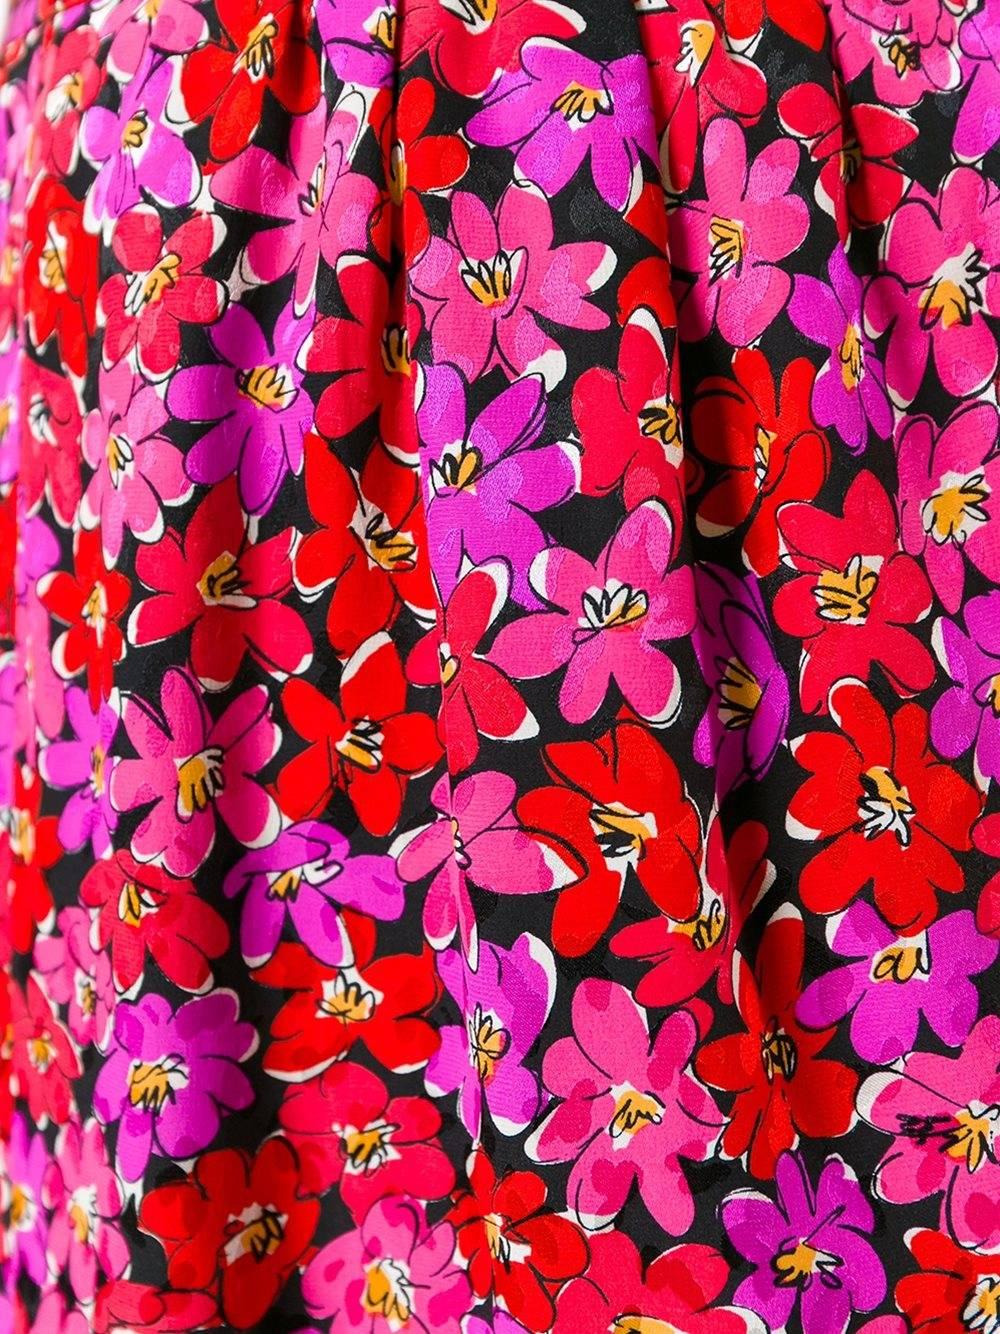 Yves Saint Laurent Vintage multicoloured silk floral print pencil skirt.

Colour: Black / Red / Purple / Pink

Material: Silk 100%

Size: FR 38

Measurements: length: 59 centimetres, hips: 90 centimetres, waist: 66 centimetres

Condition: